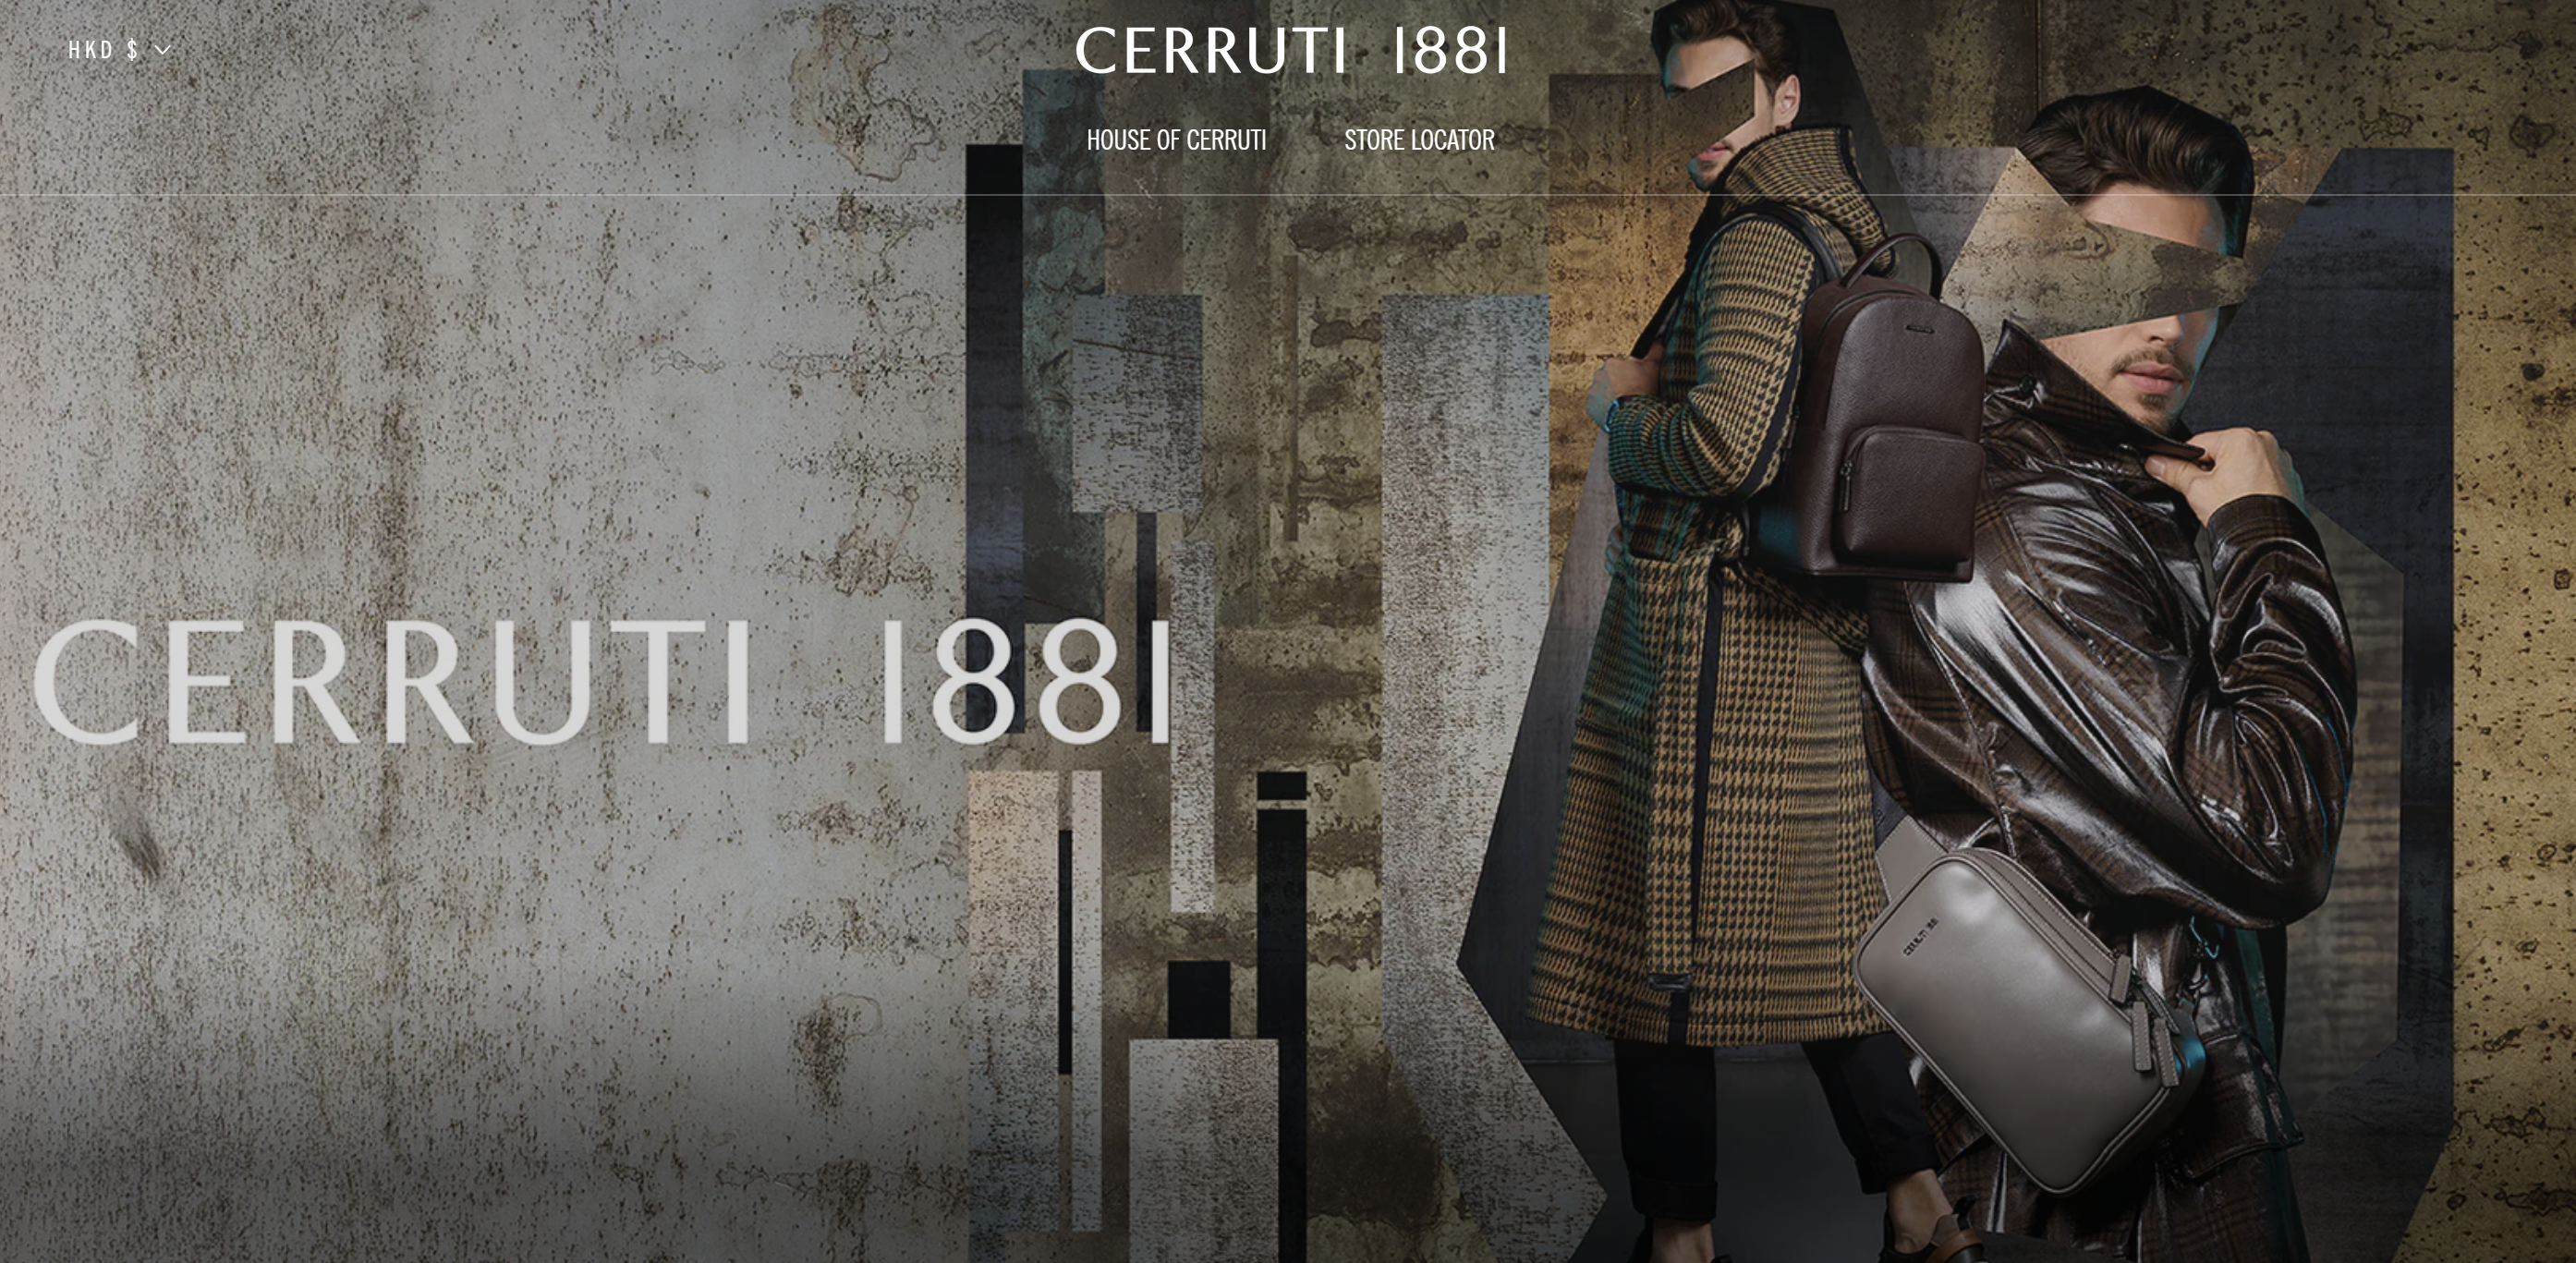 Chinese Apparel Company Biem.L.Fdlkk Garment Acquires Cerruti 1881 and Kent & Curwen for 95 Million Euros